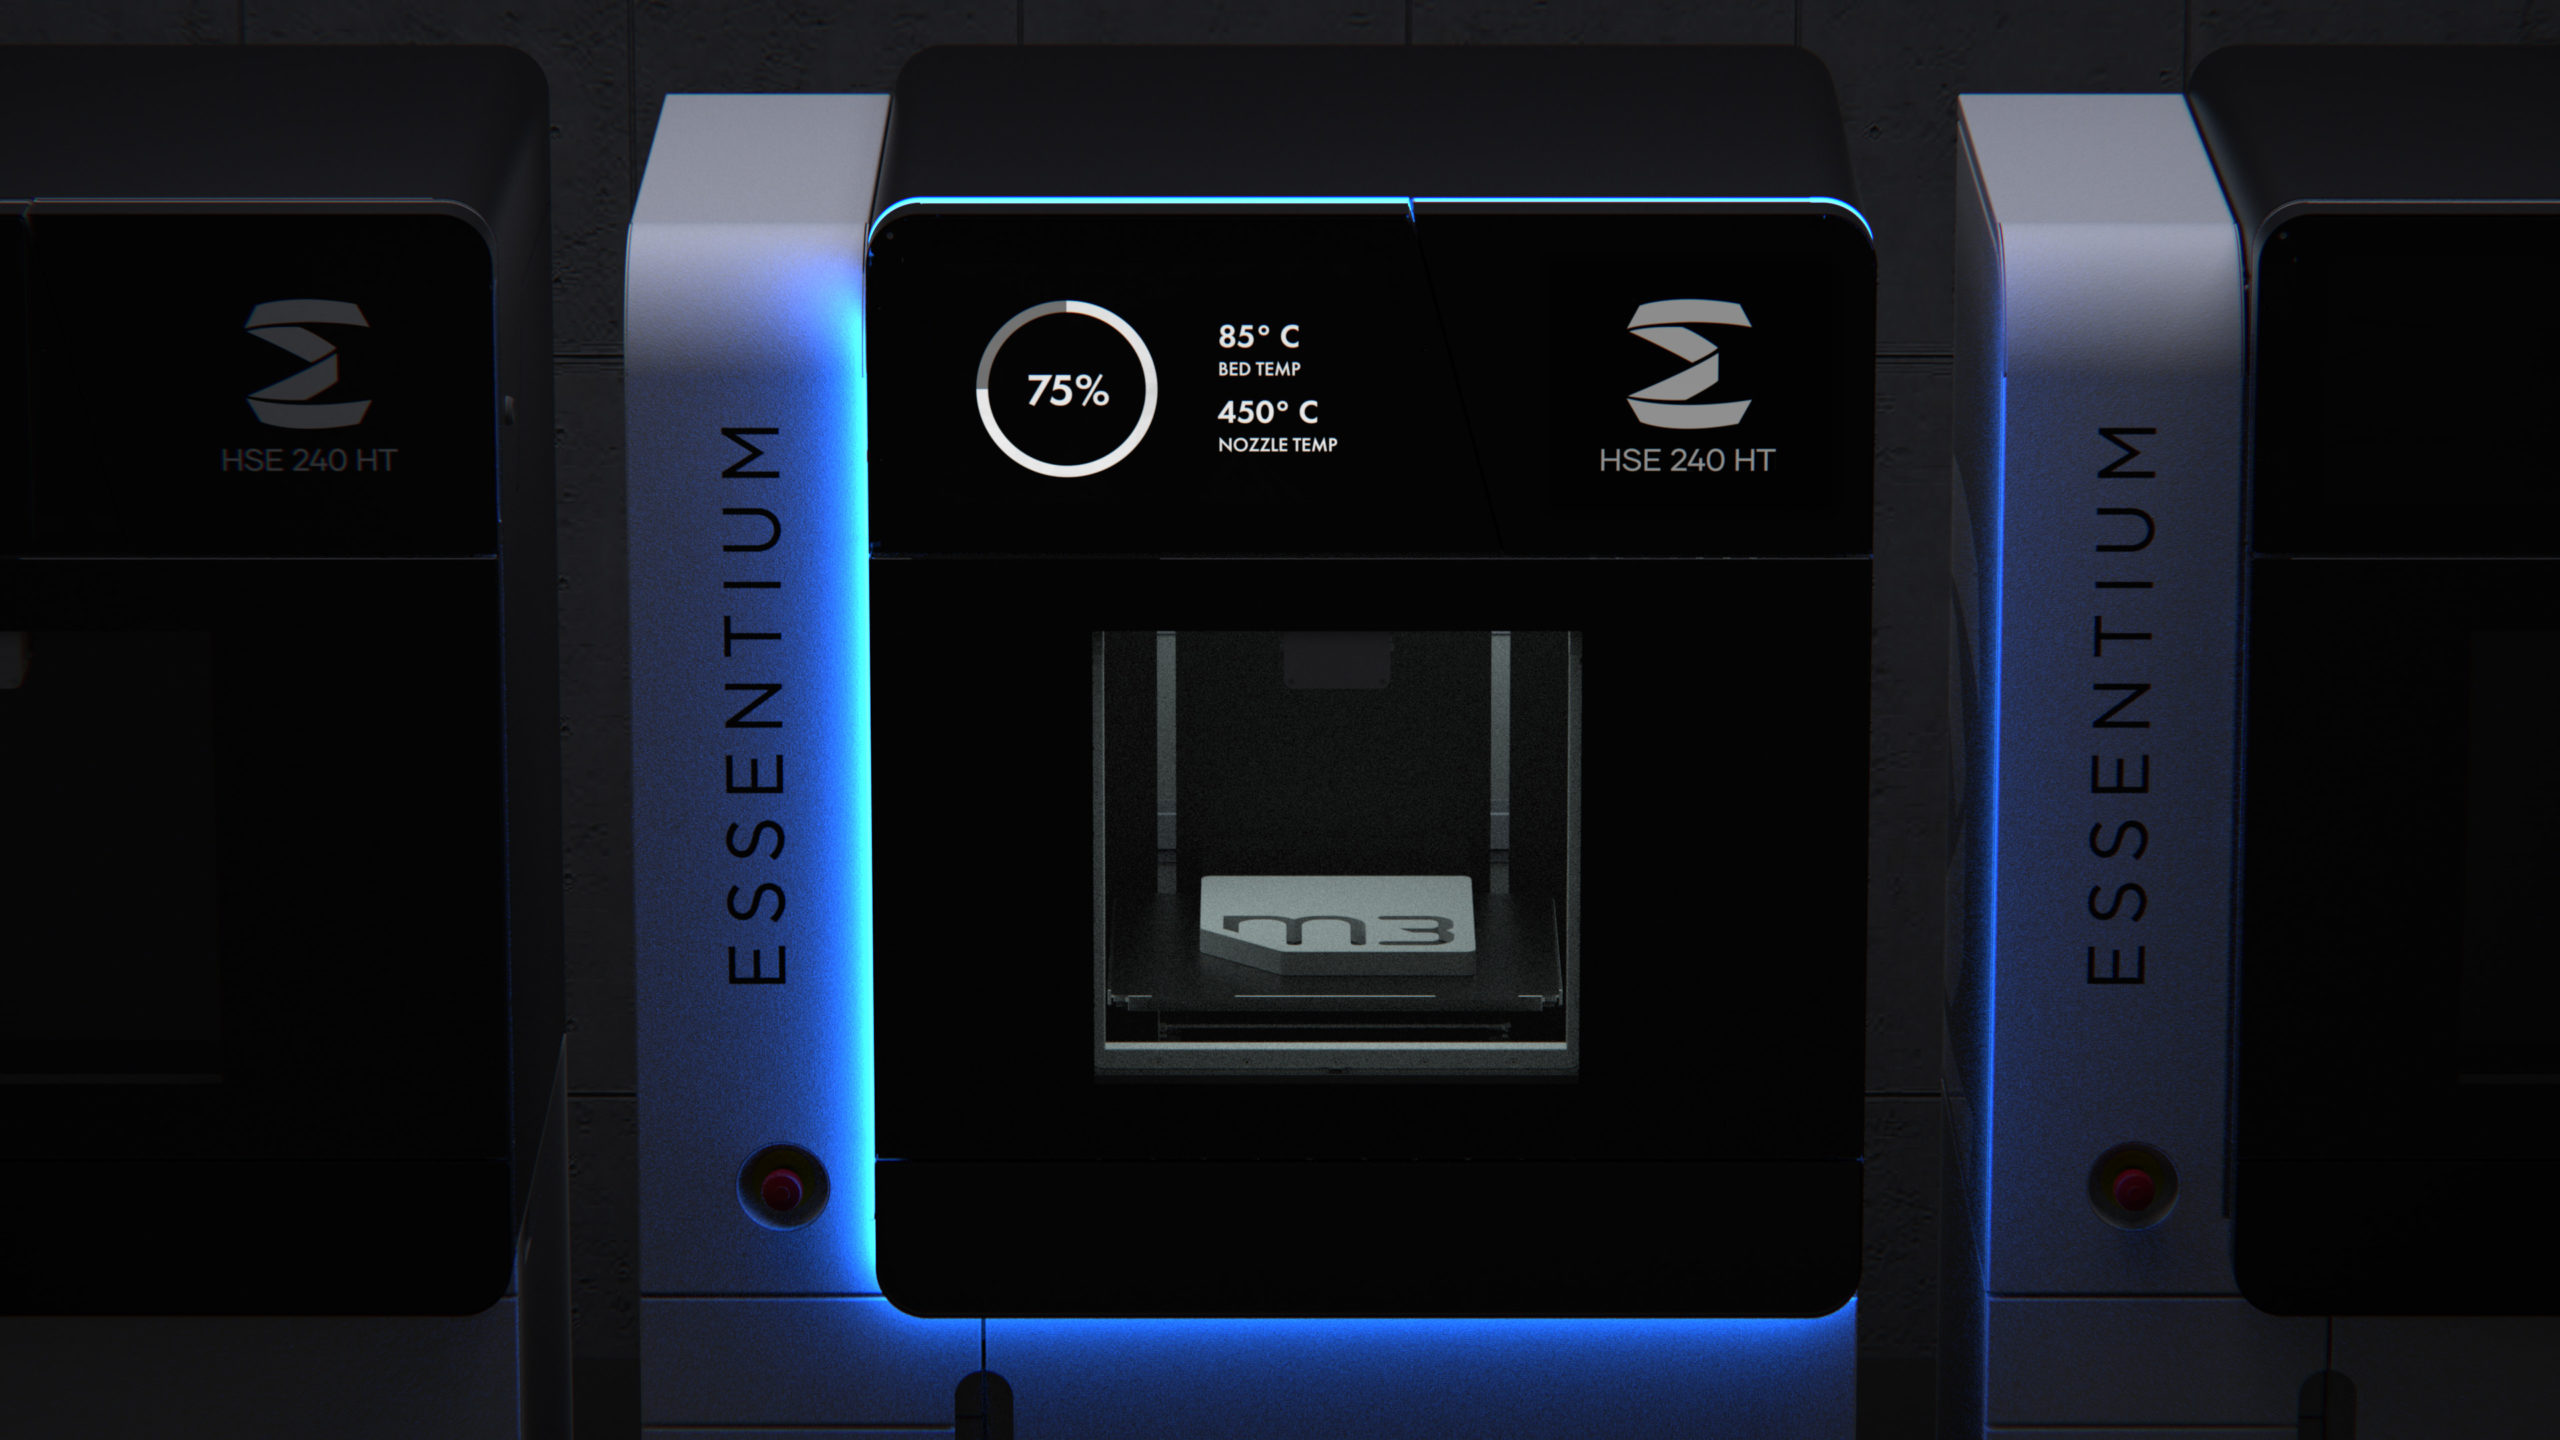 hse240 printing an M3 logo